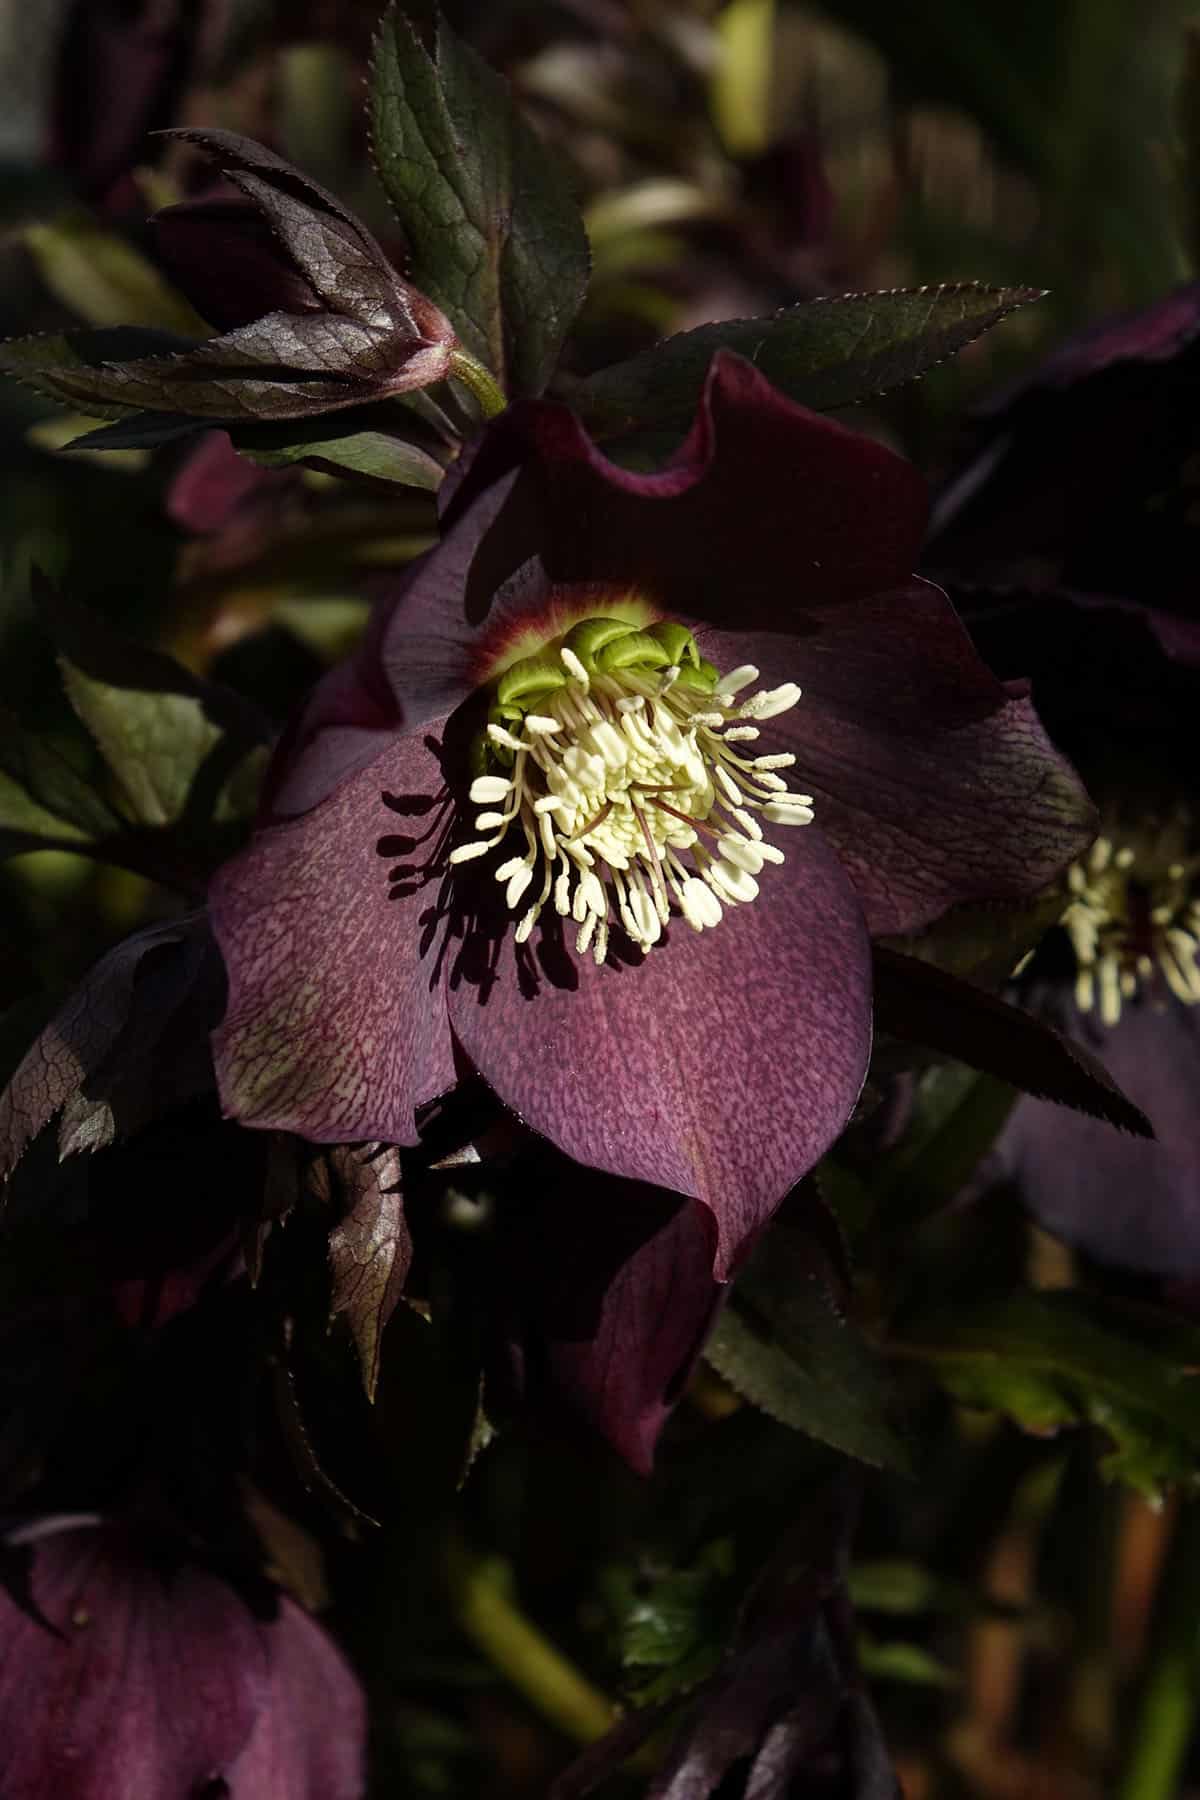 A close up of a burgundy black flower.